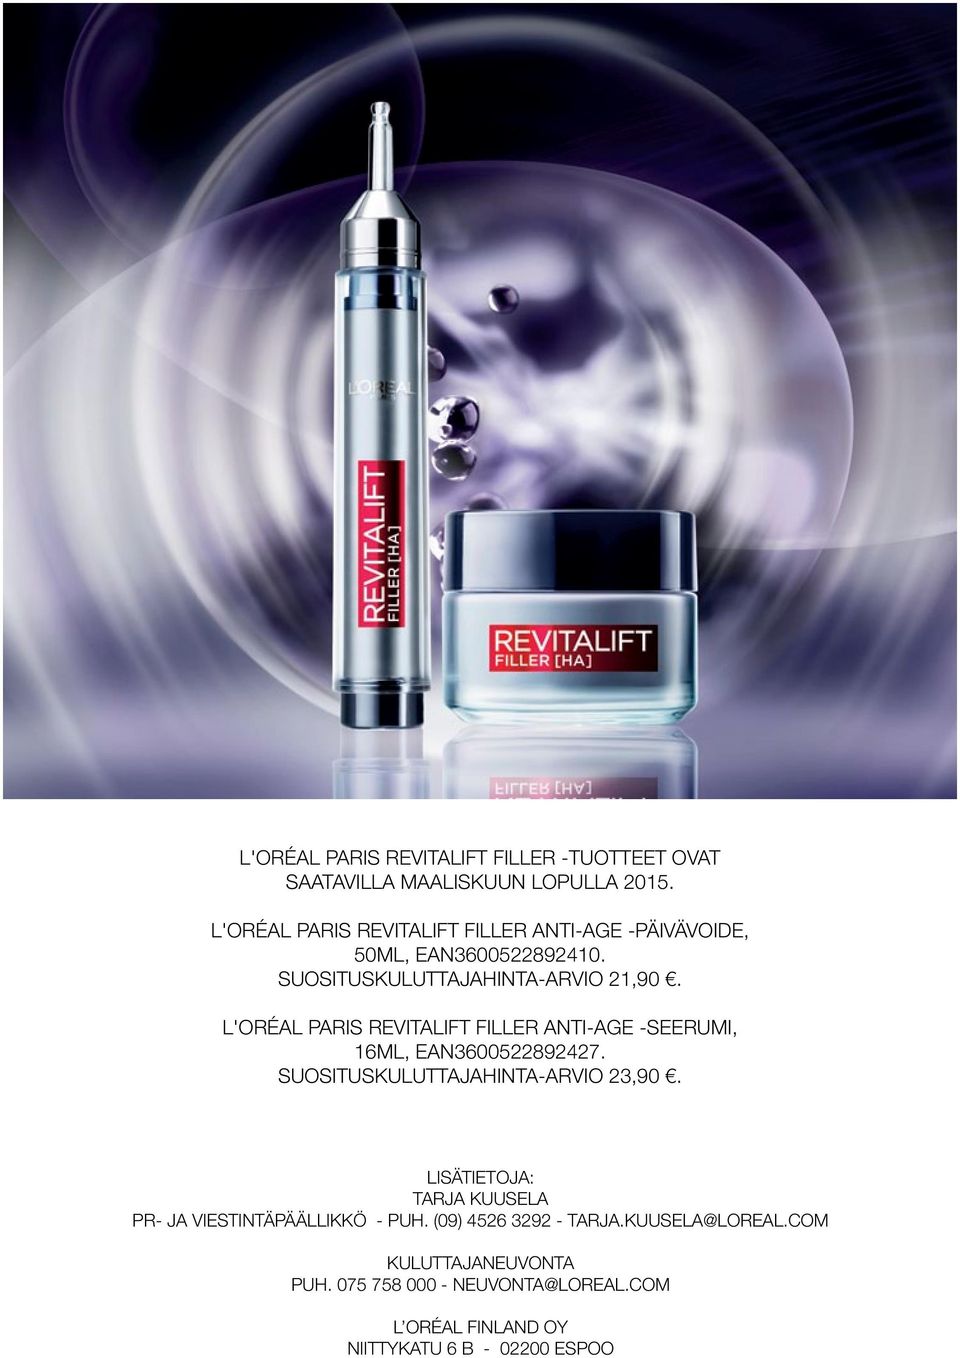 L'Oréal Paris Revitalift Filler anti-age -seerumi, 16ml, EAN3600522892427. Suosituskuluttajahinta-arvio 23,90.